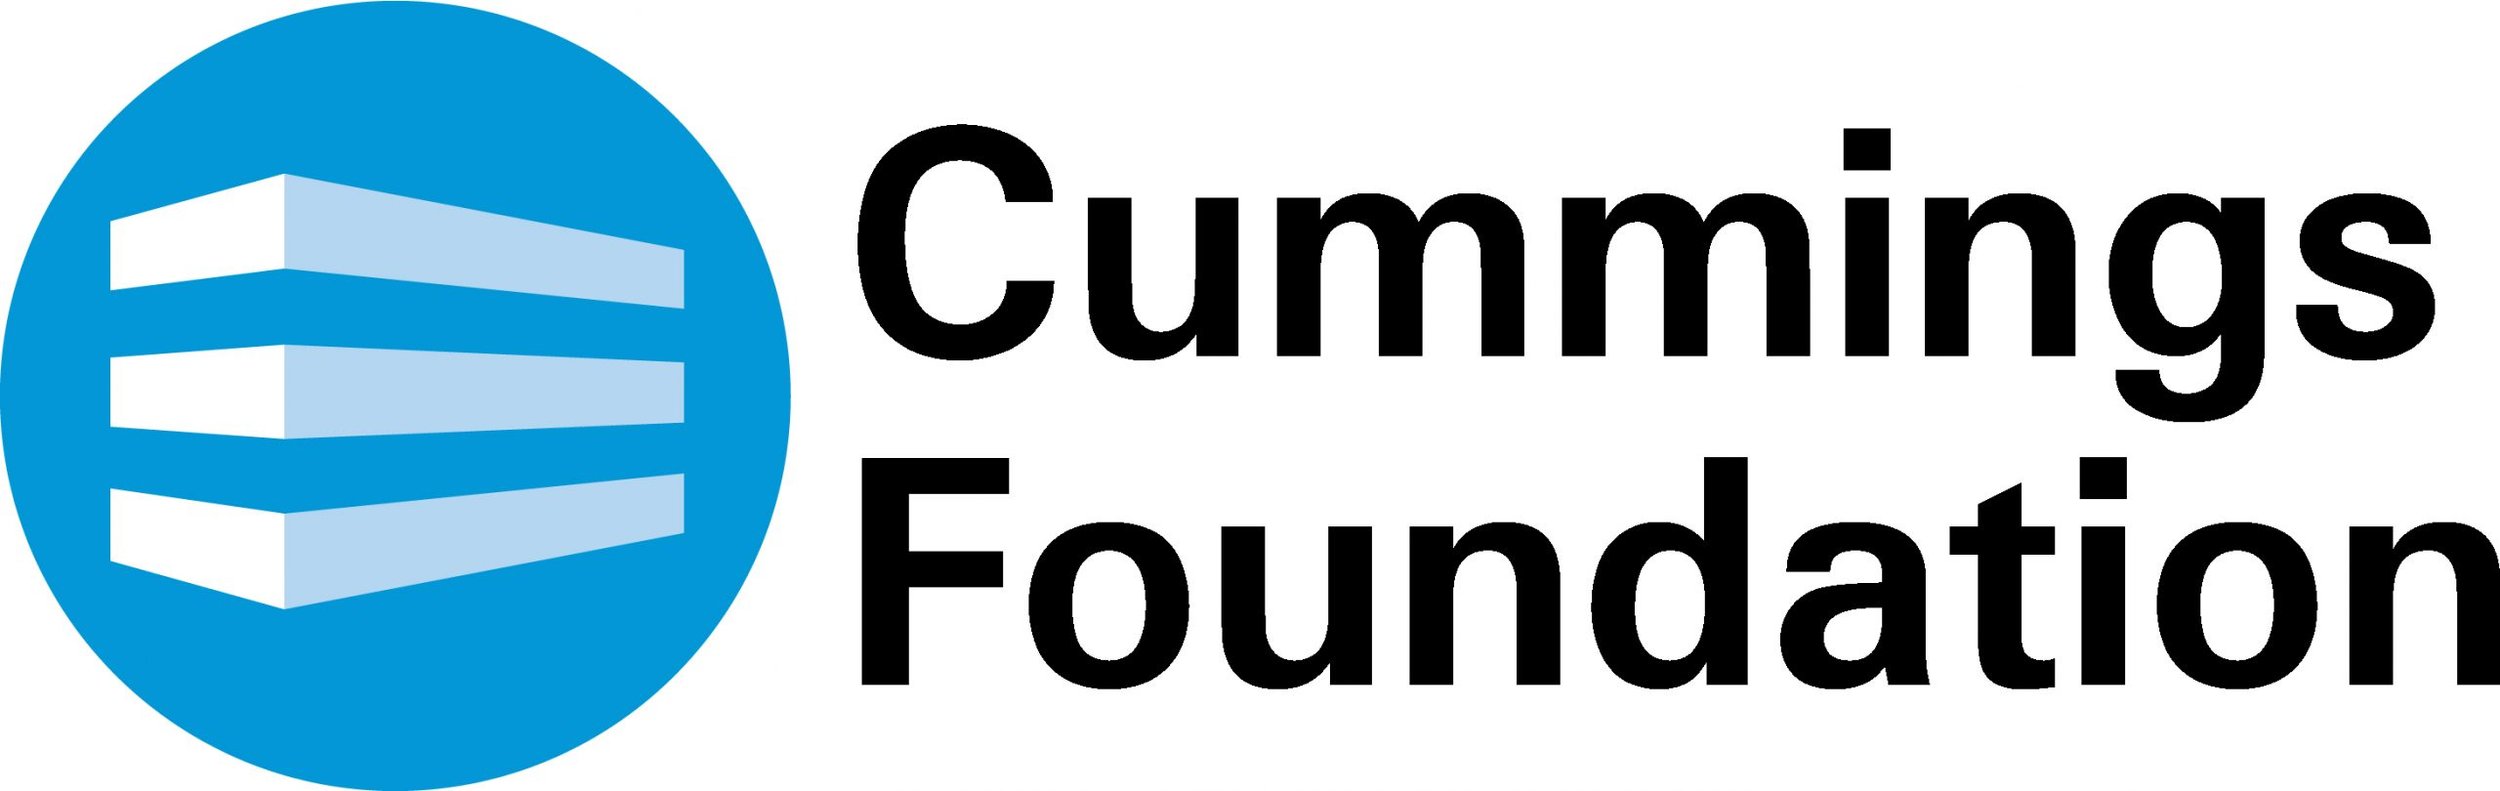 Cummings_Foundation_logo-scaled.jpg